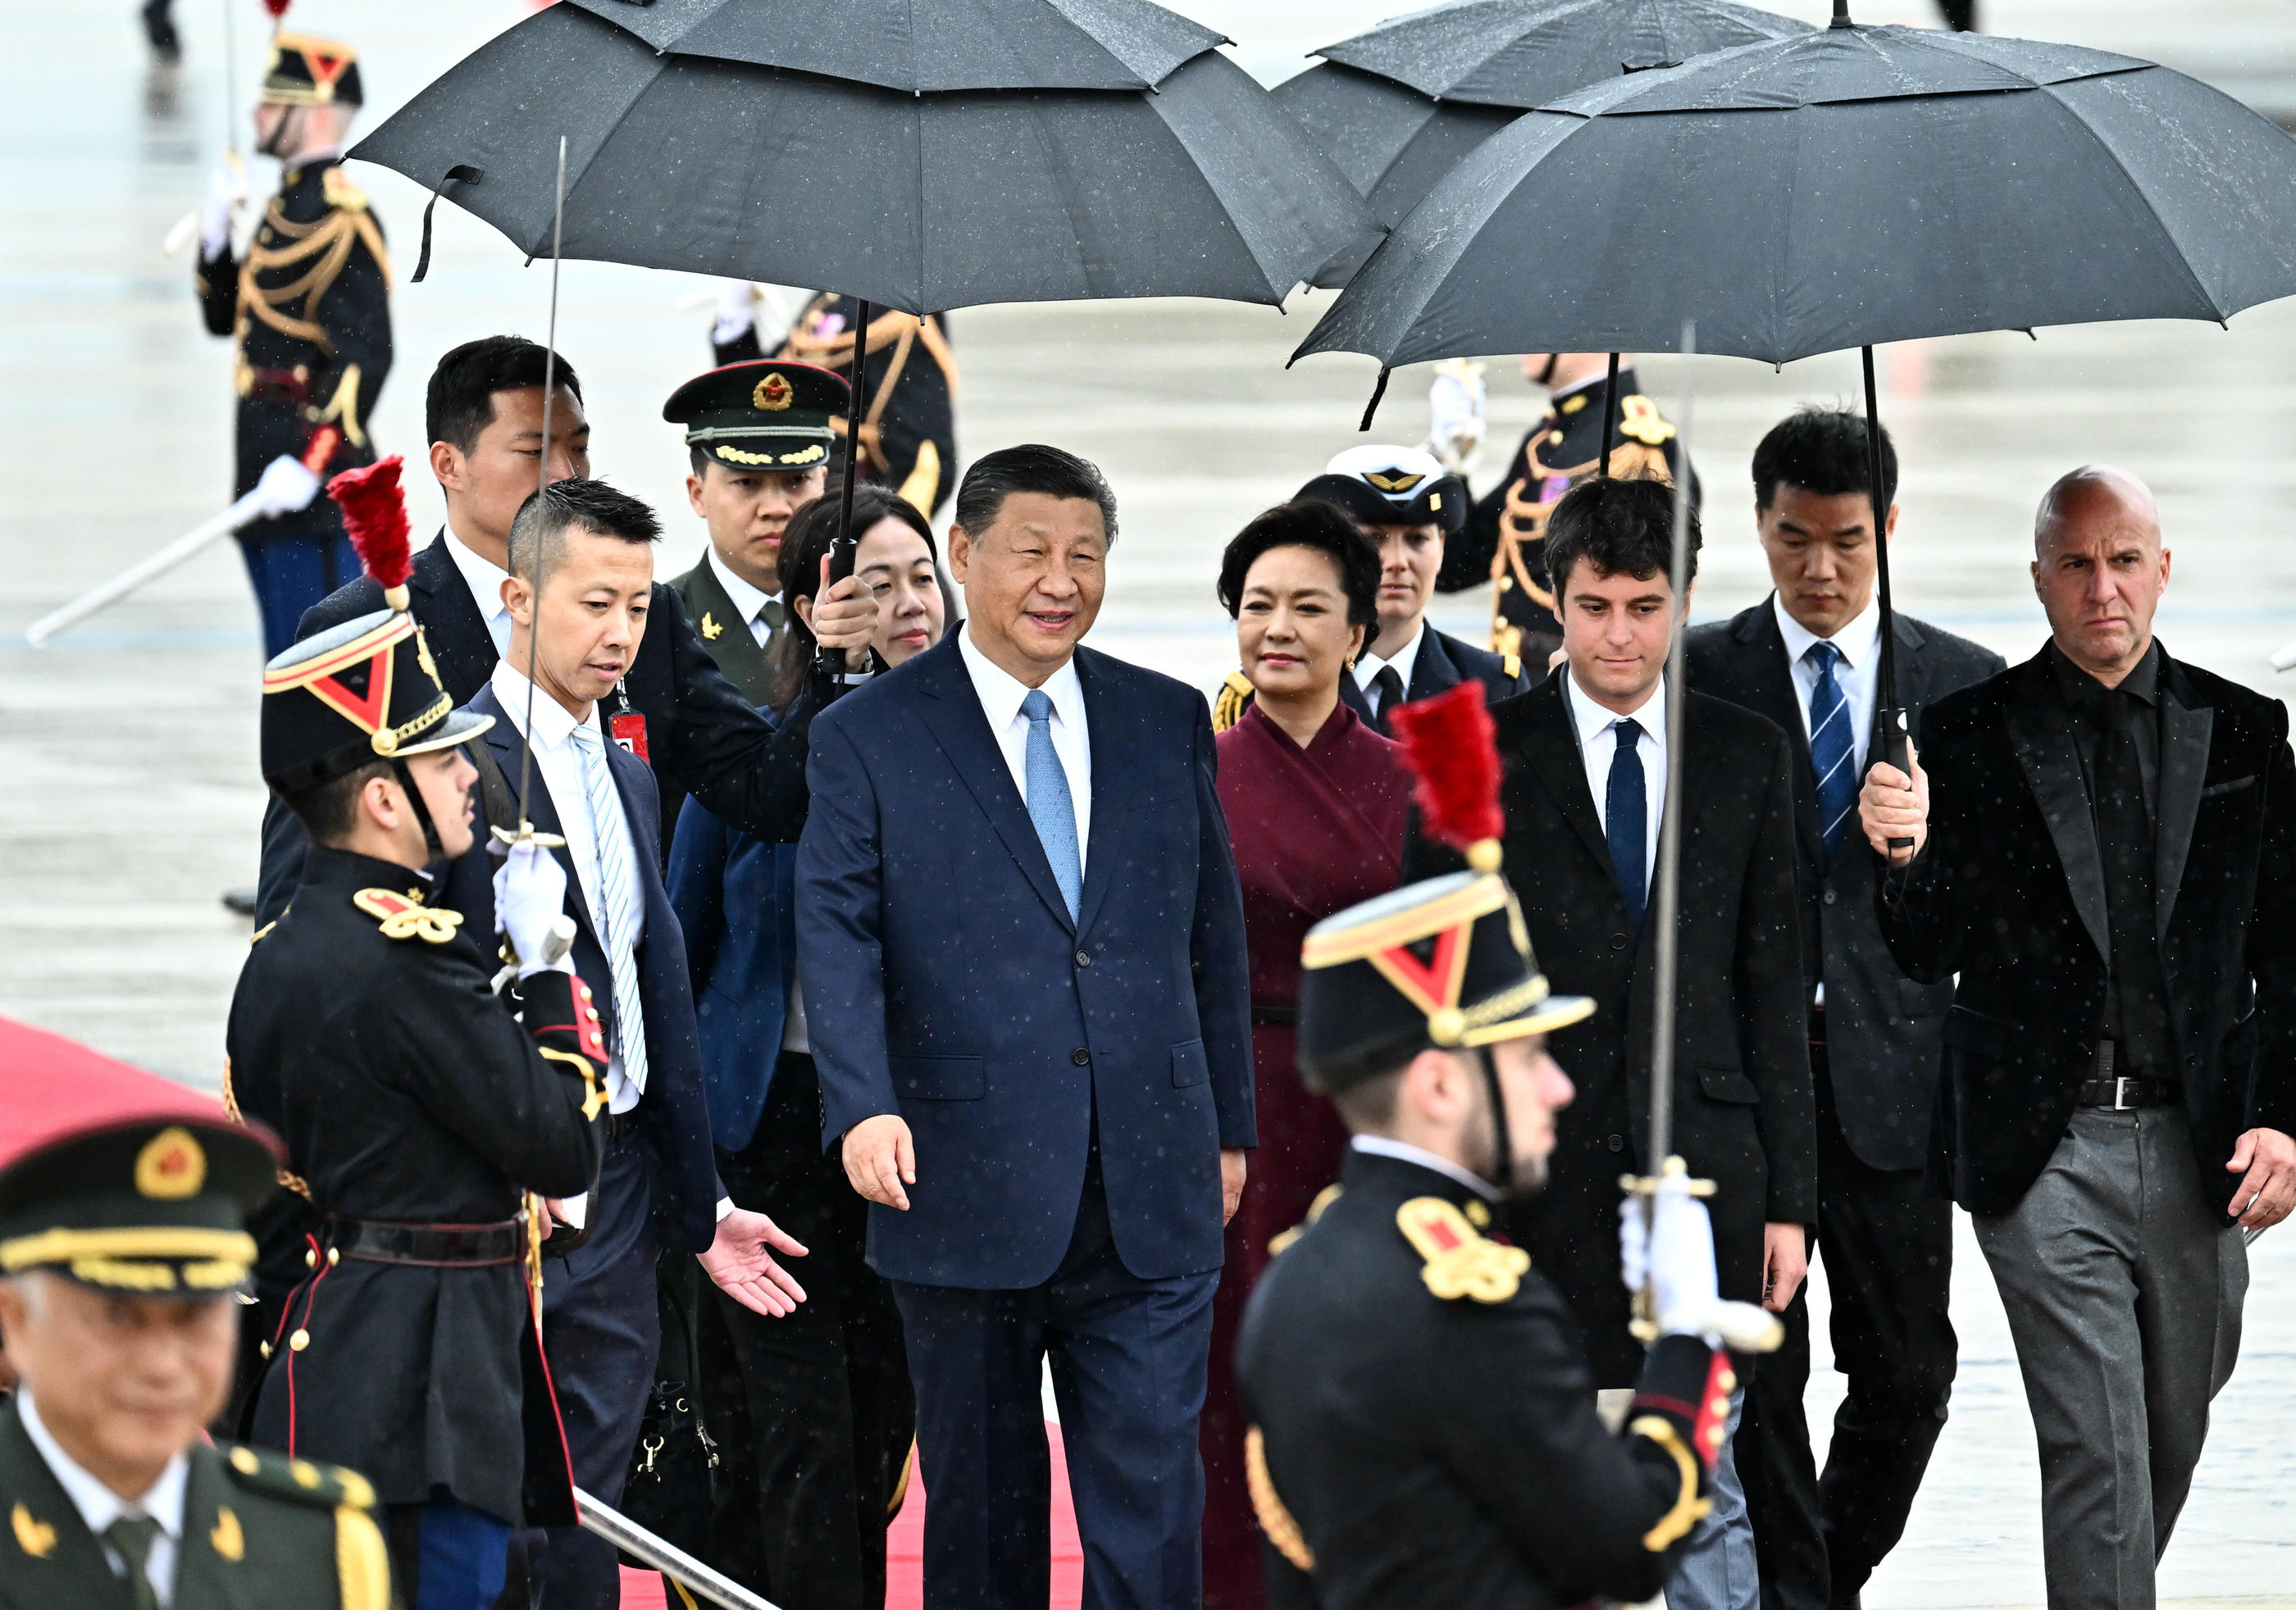 Le président chinois Xi Jinping est en visite d'Etat jusqu'à mardi midi. (Xinhua/Yan Yan)